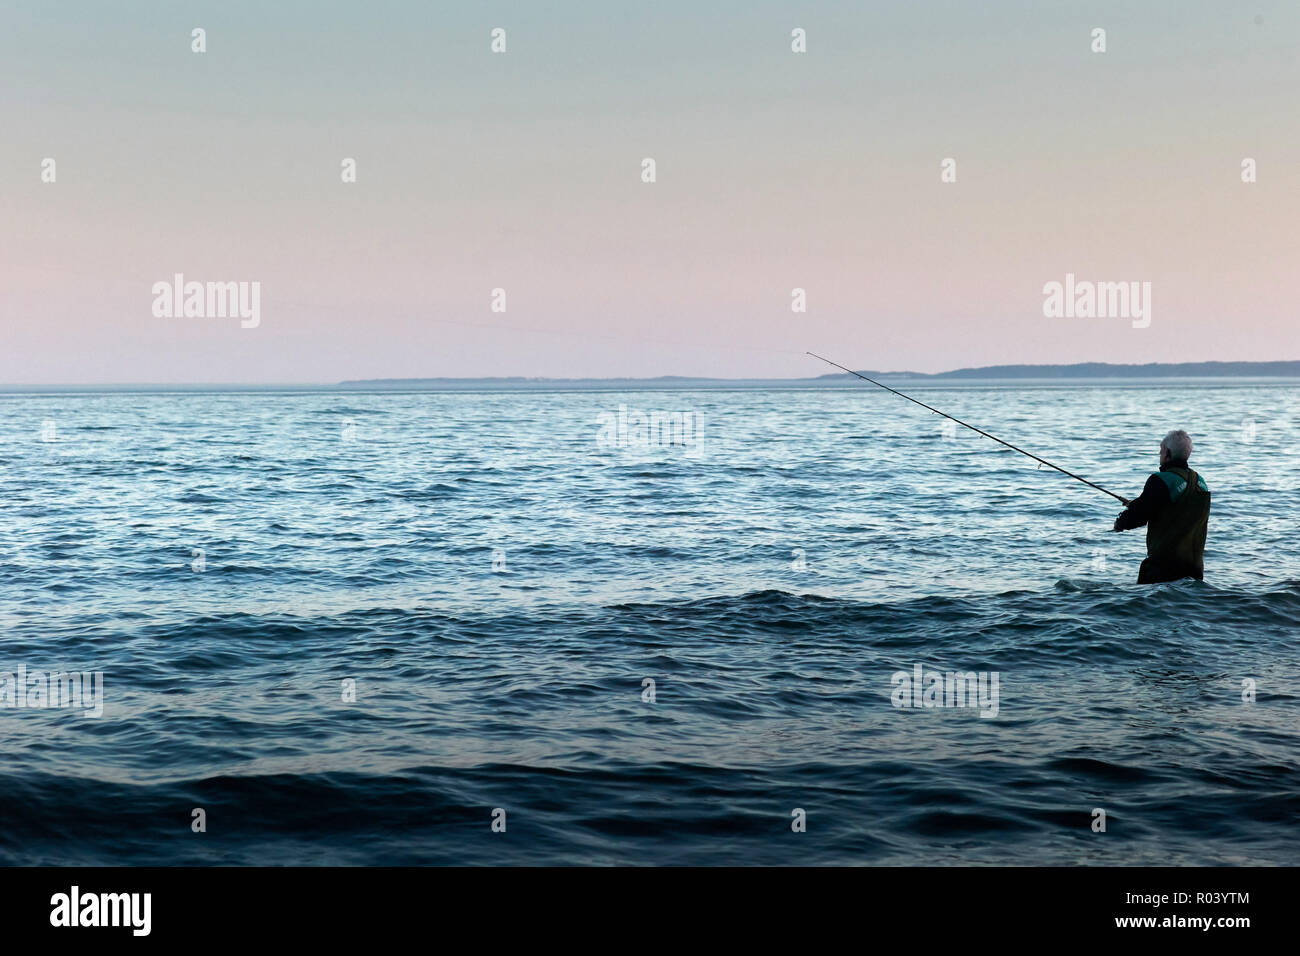 Baltic island Ruegen, Mecklenburg-Western Pomerania, Germany - Angler fishing in the water Stock Photo